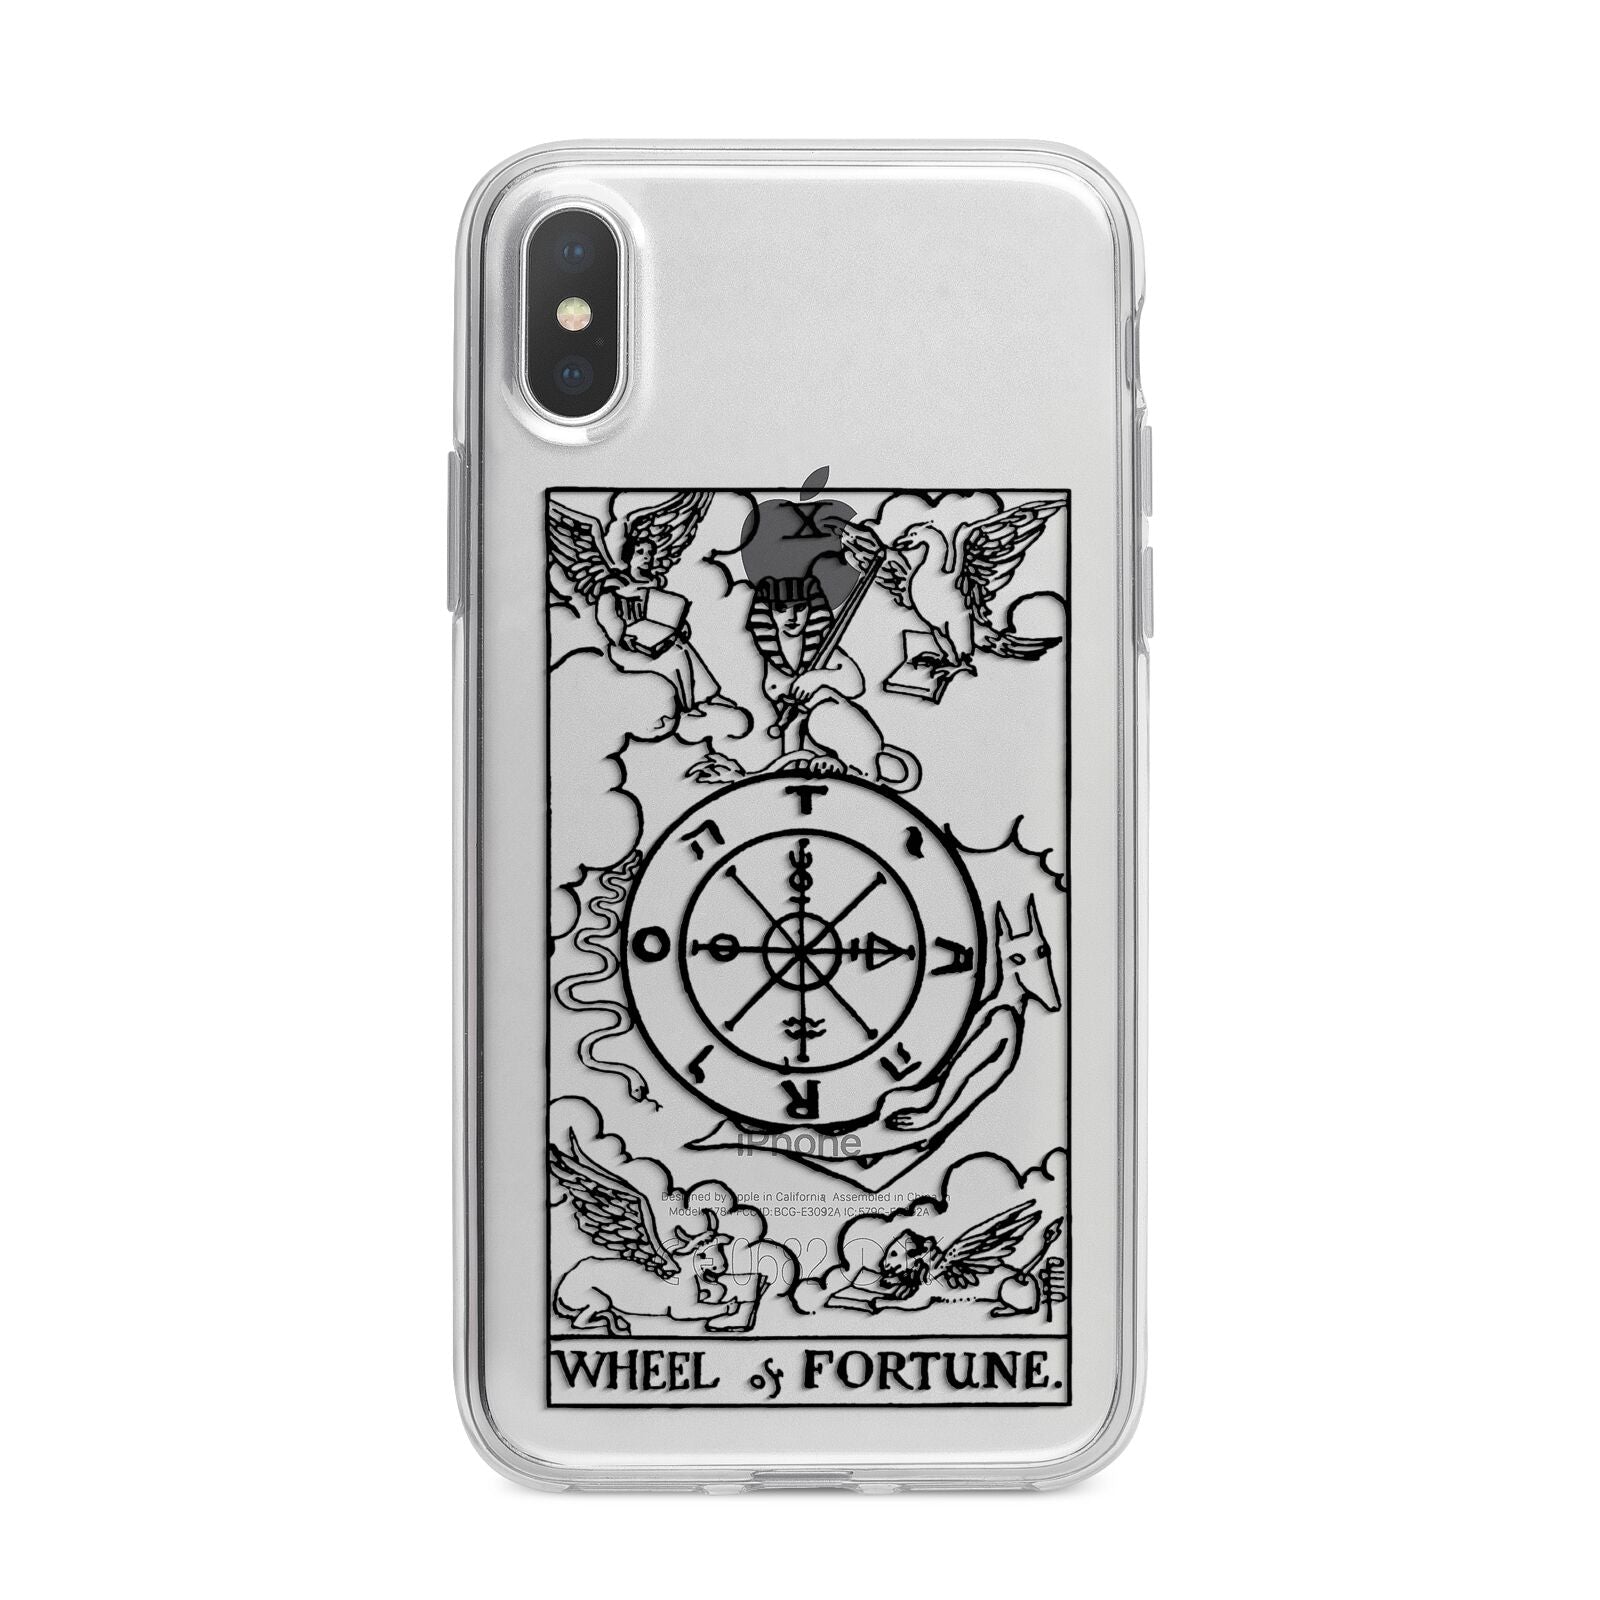 Wheel of Fortune Monochrome Tarot Card iPhone X Bumper Case on Silver iPhone Alternative Image 1